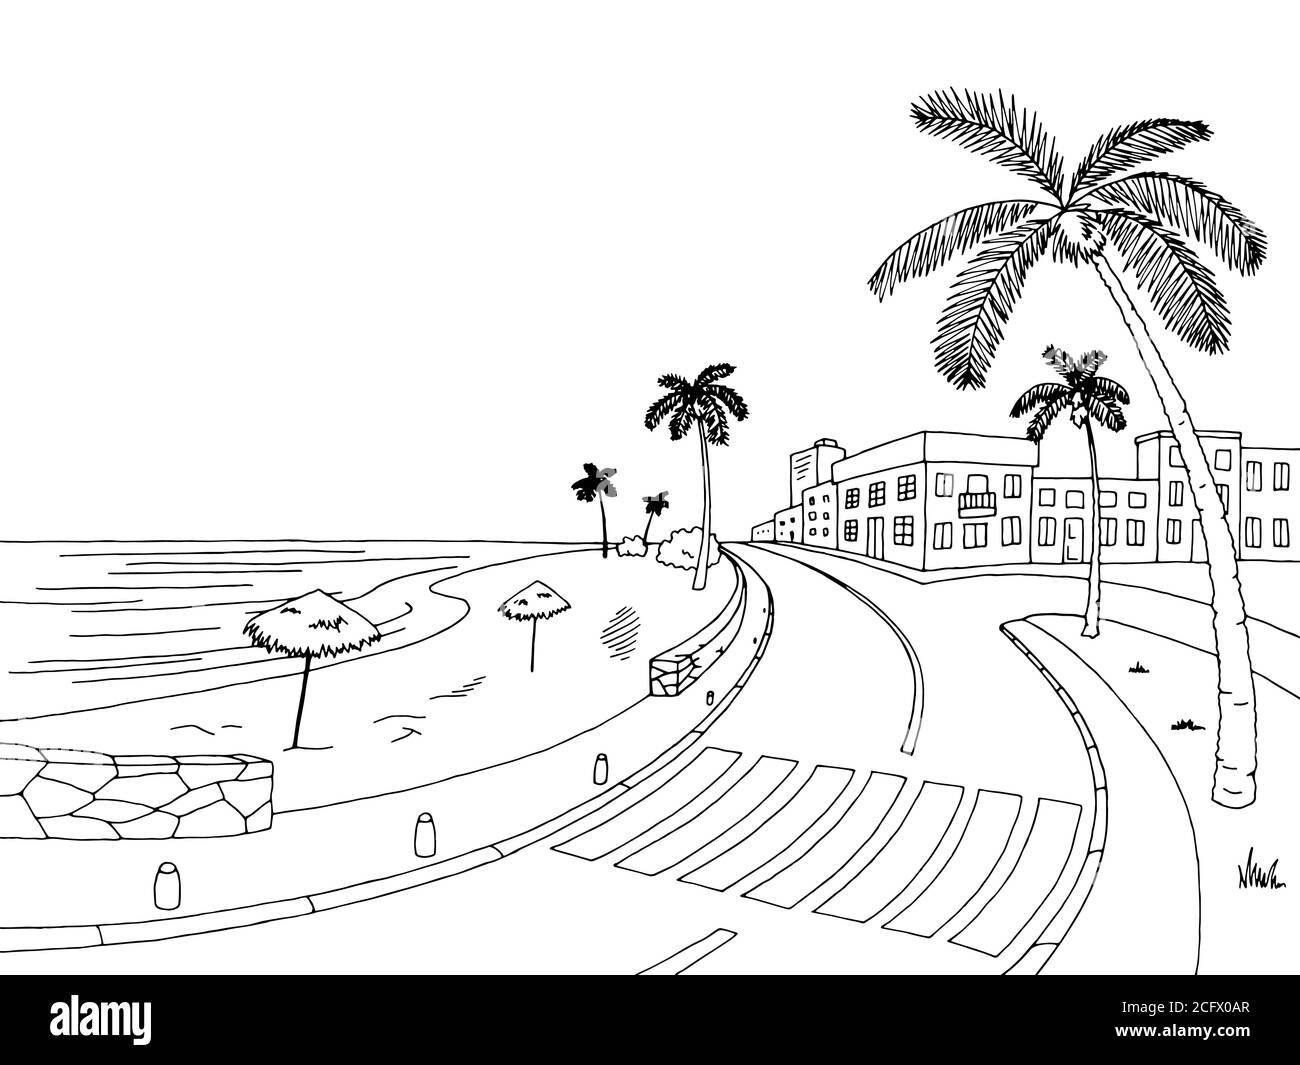 Street road palm tree graphic black white landscape sketch illustration vector Stock Vector